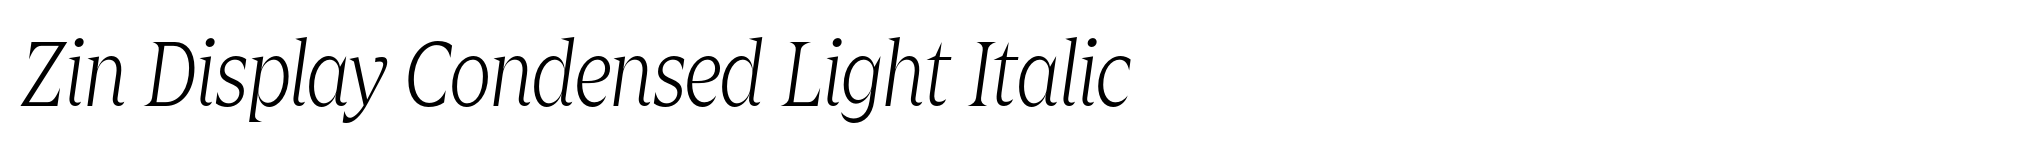 Zin Display Condensed Light Italic image